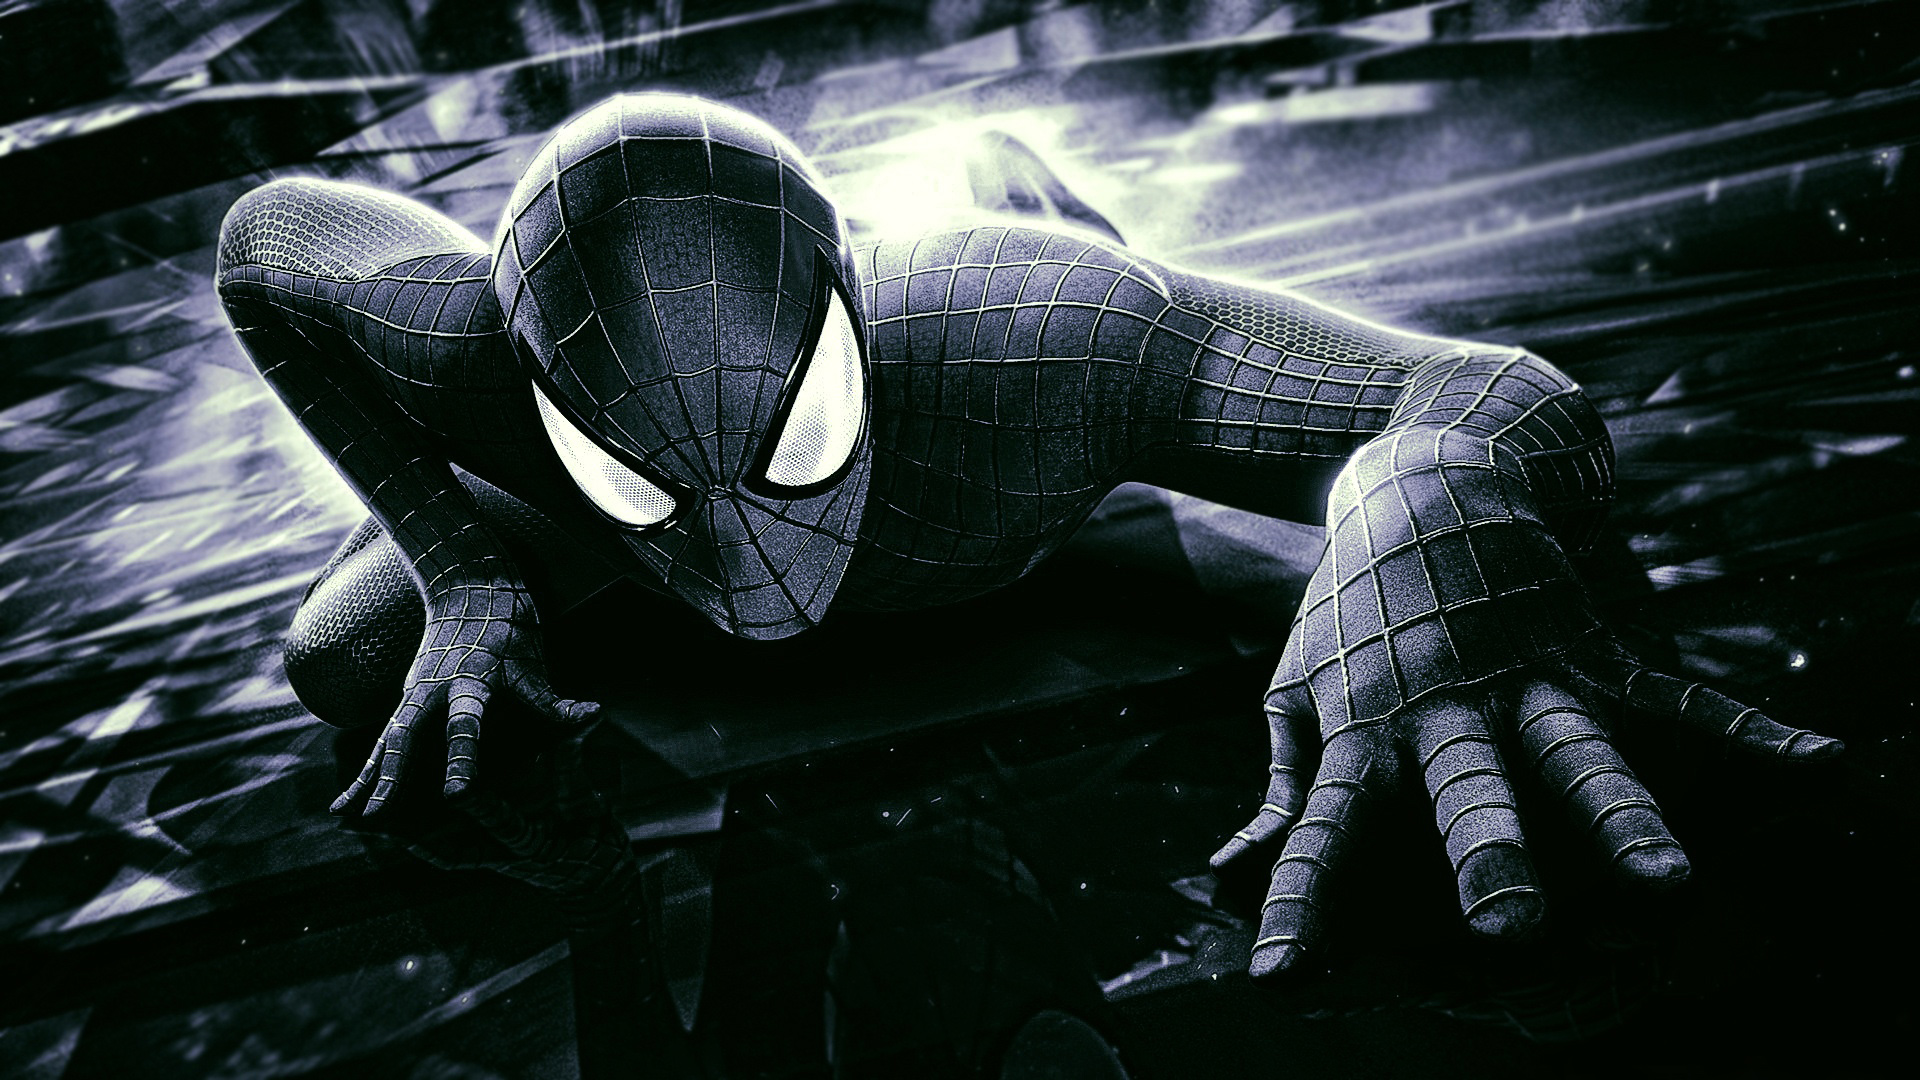 Spider Man 3 HD Wallpaper Background Image 1920x1080 ID 785514 